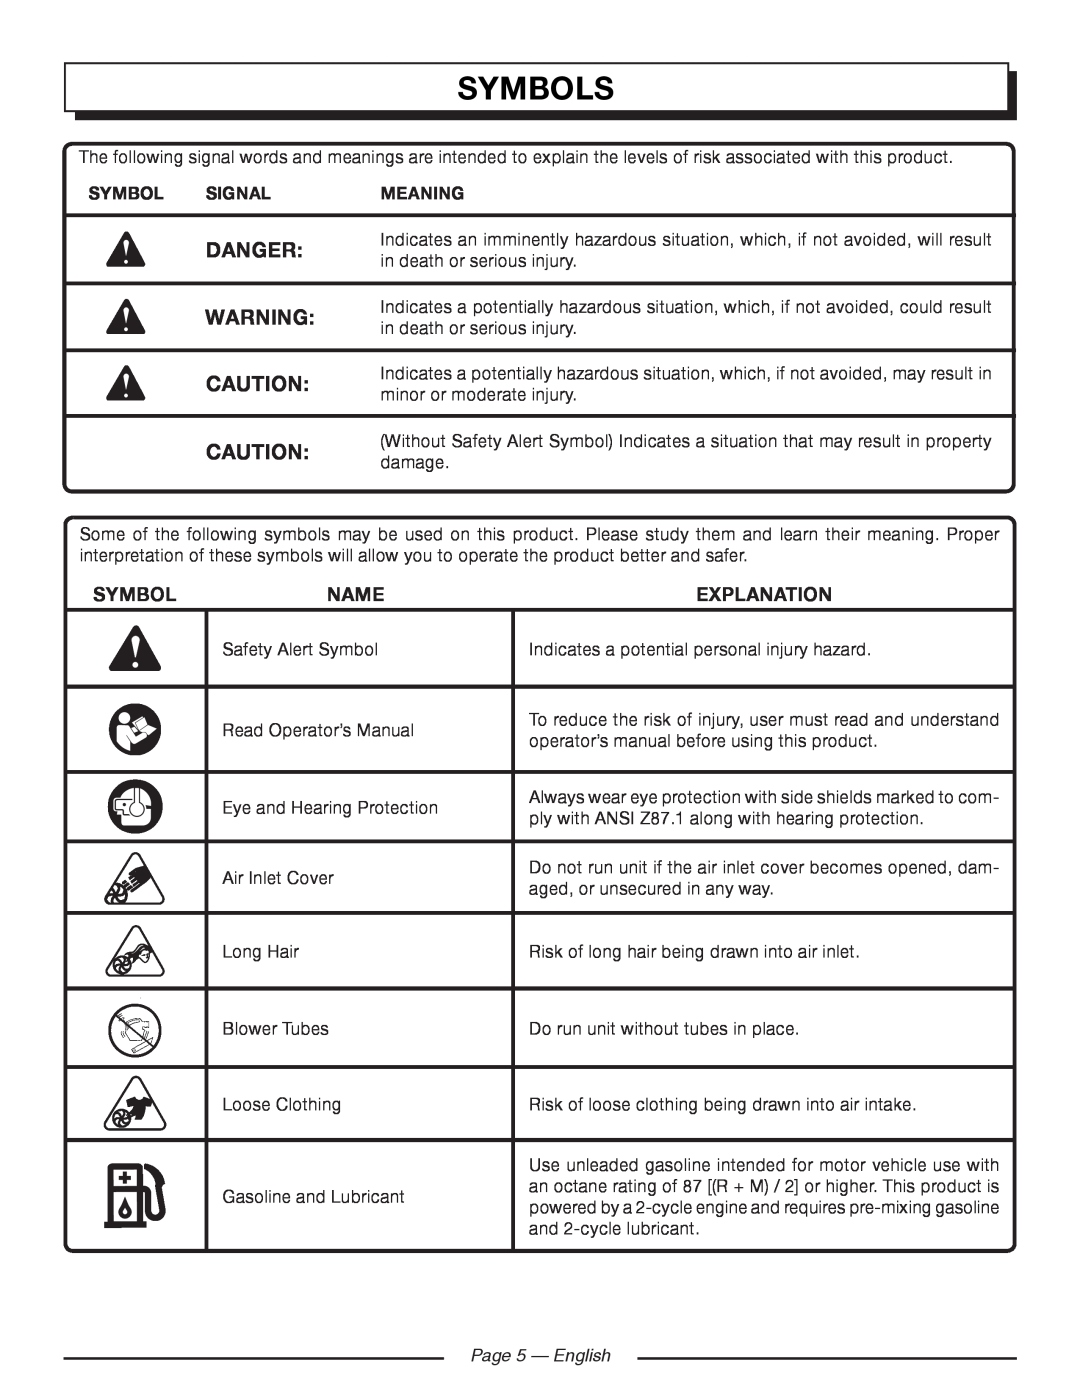 Homelite UT09520 manuel dutilisation Symbols, Danger, Name, Explanation, Signal, Meaning, Page 5 - English 